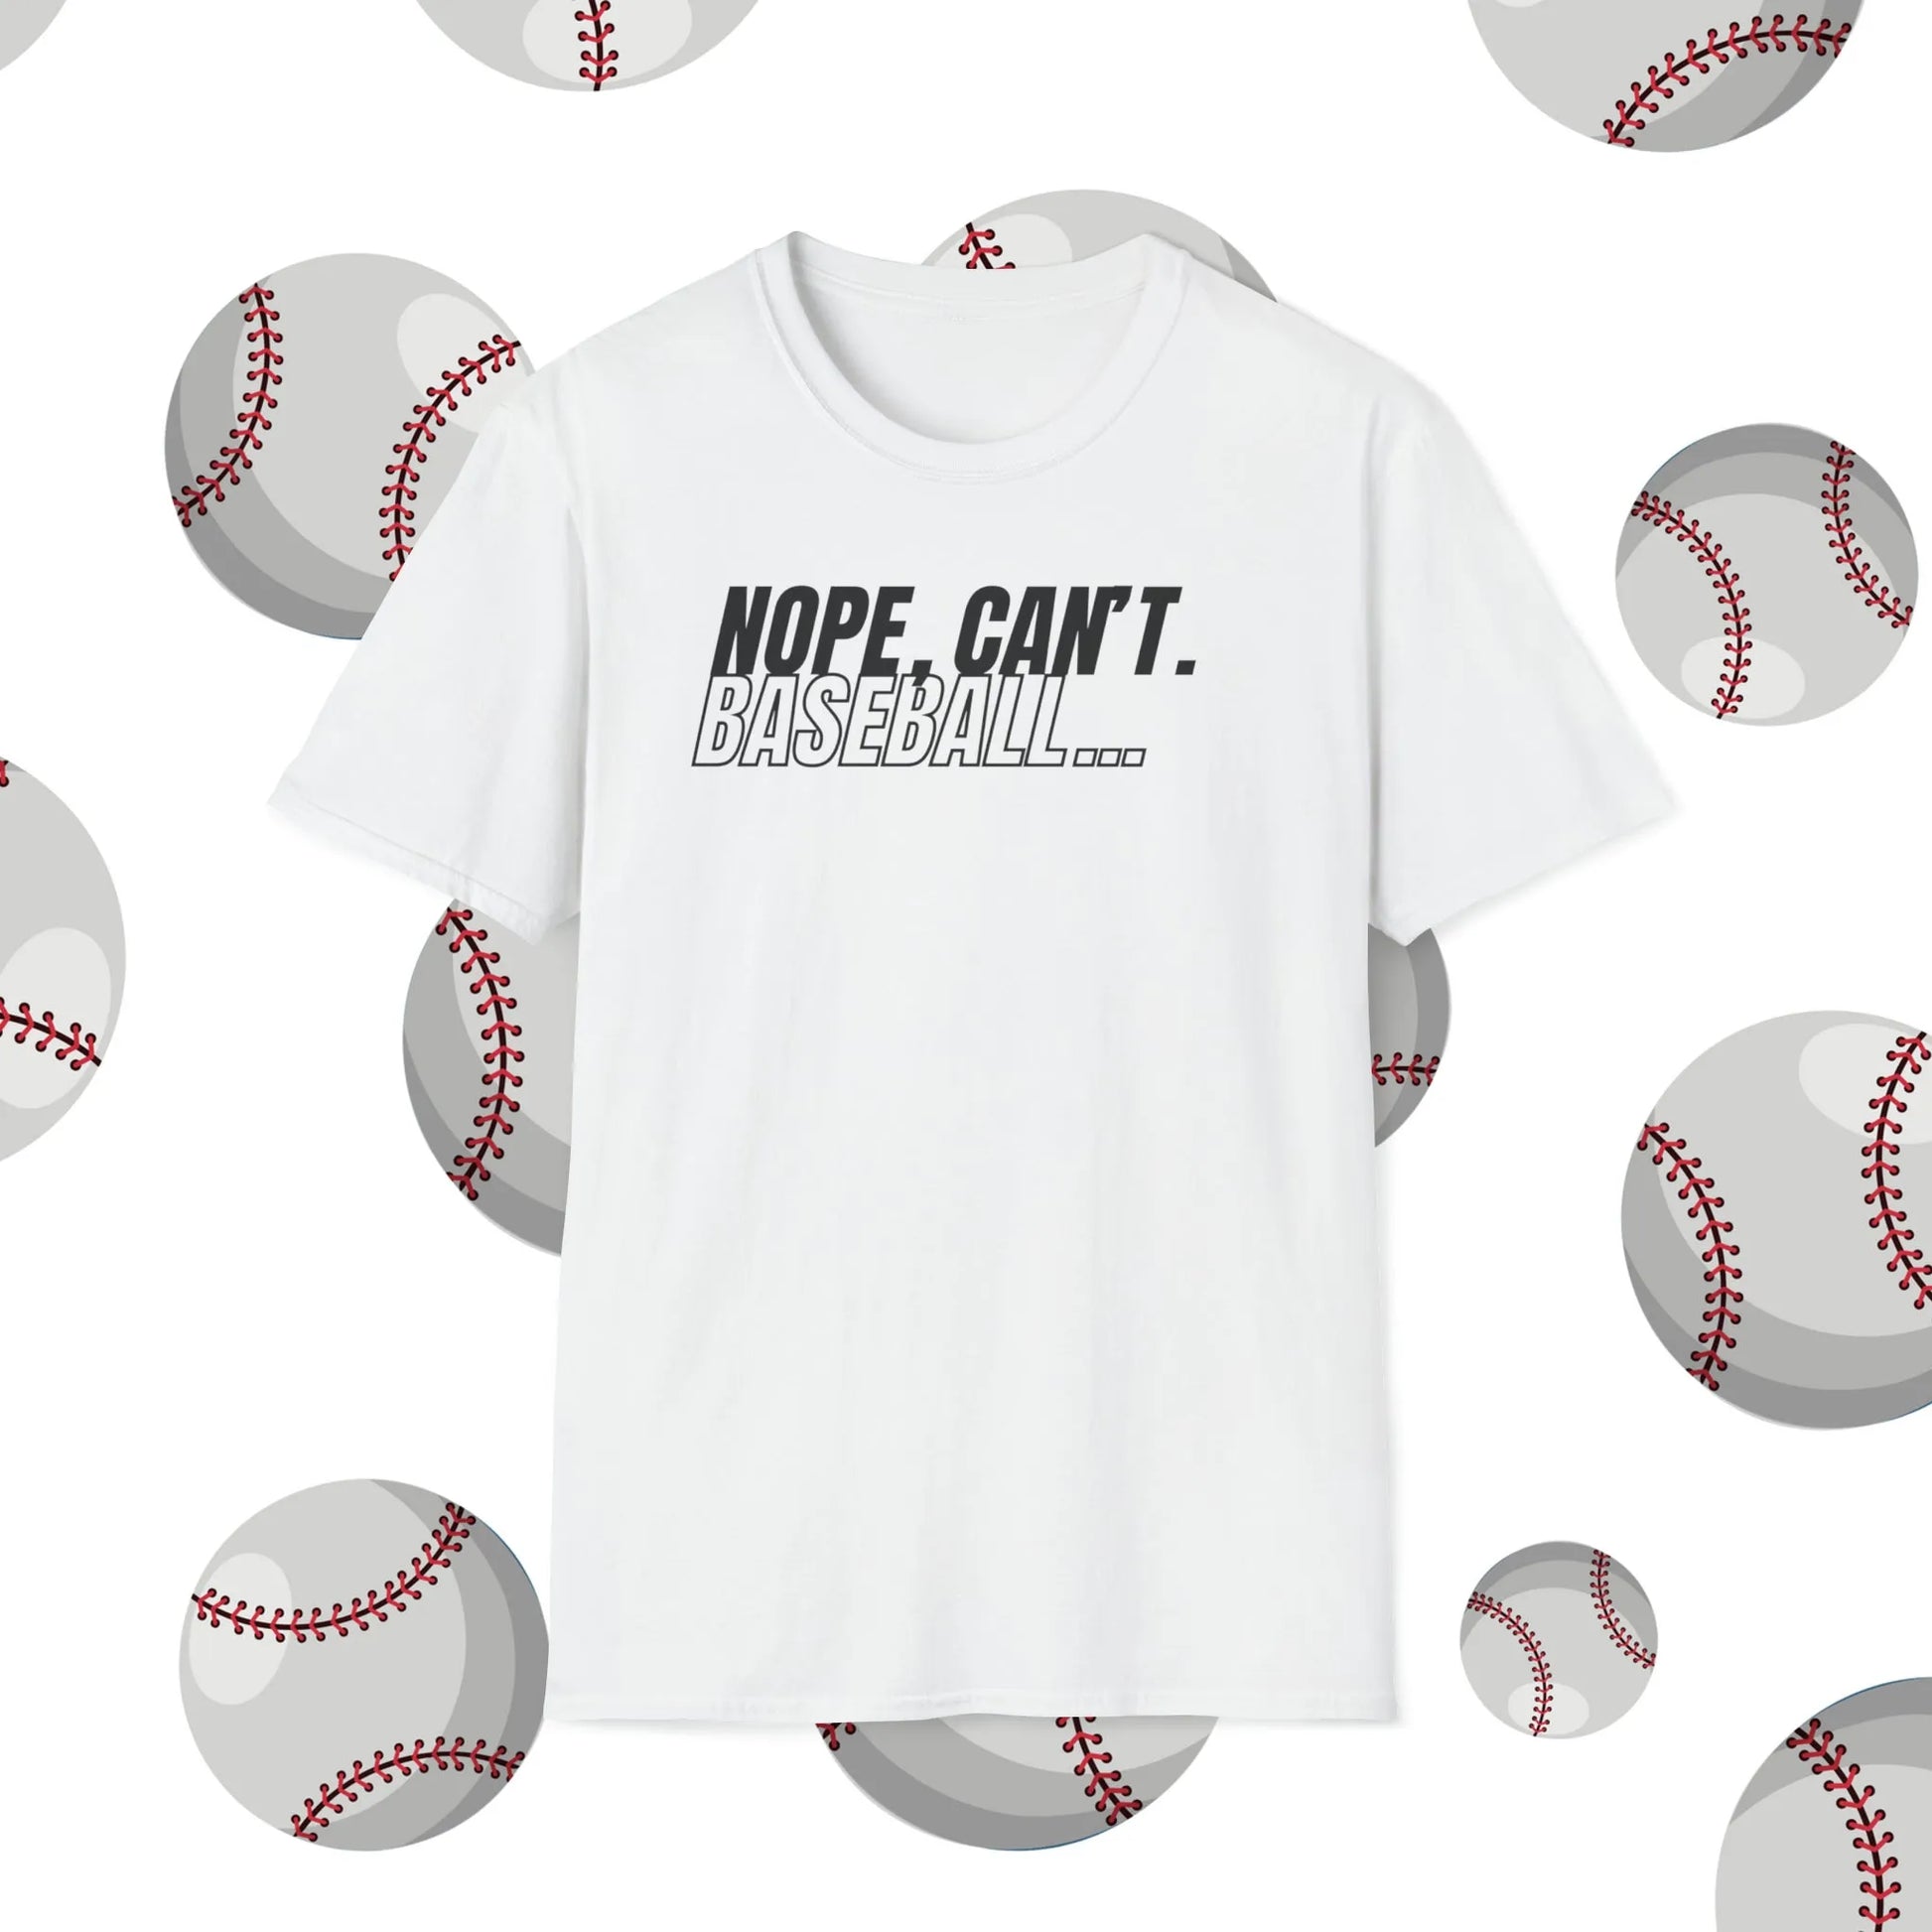 Nope, Can't. Baseball... Tshirt - Funny Baseball Shirt - Nope Can't Baseball Shirt White Shirt